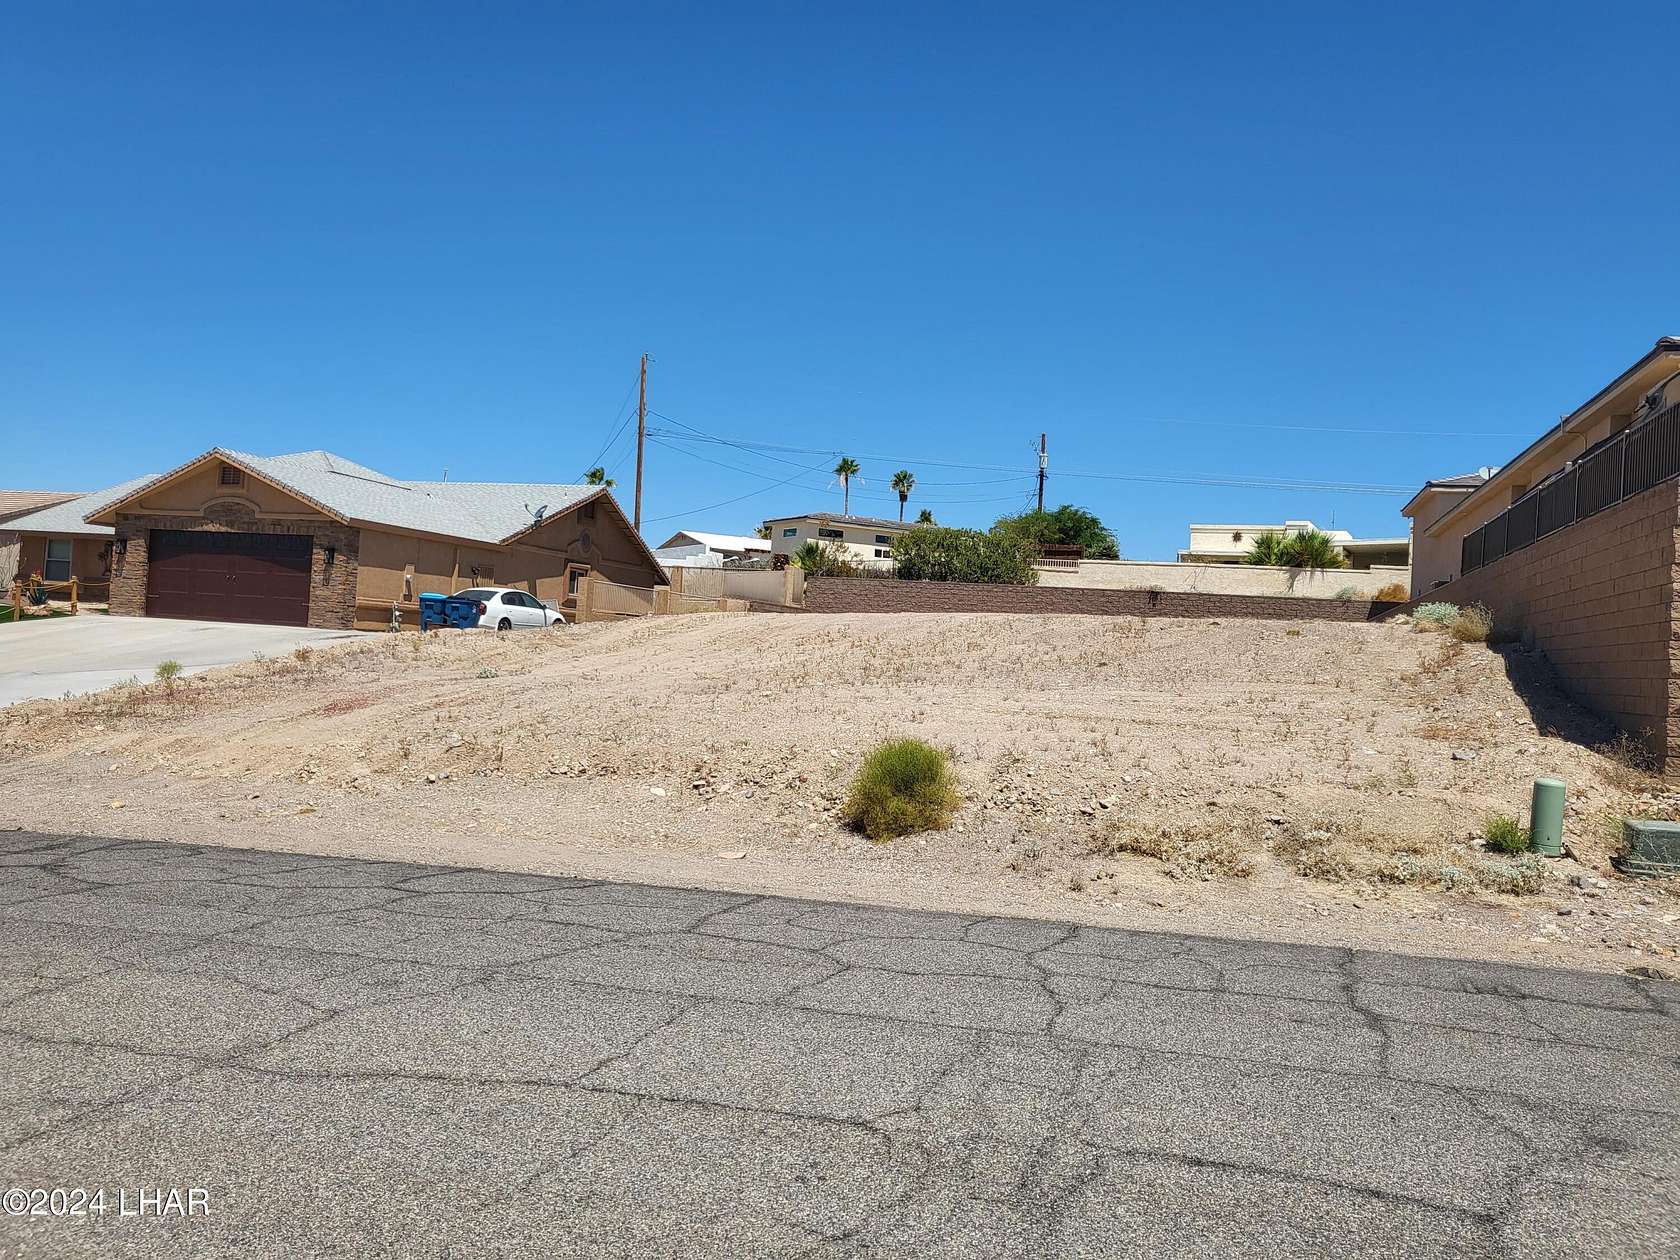 0.23 Acres of Residential Land for Sale in Lake Havasu City, Arizona